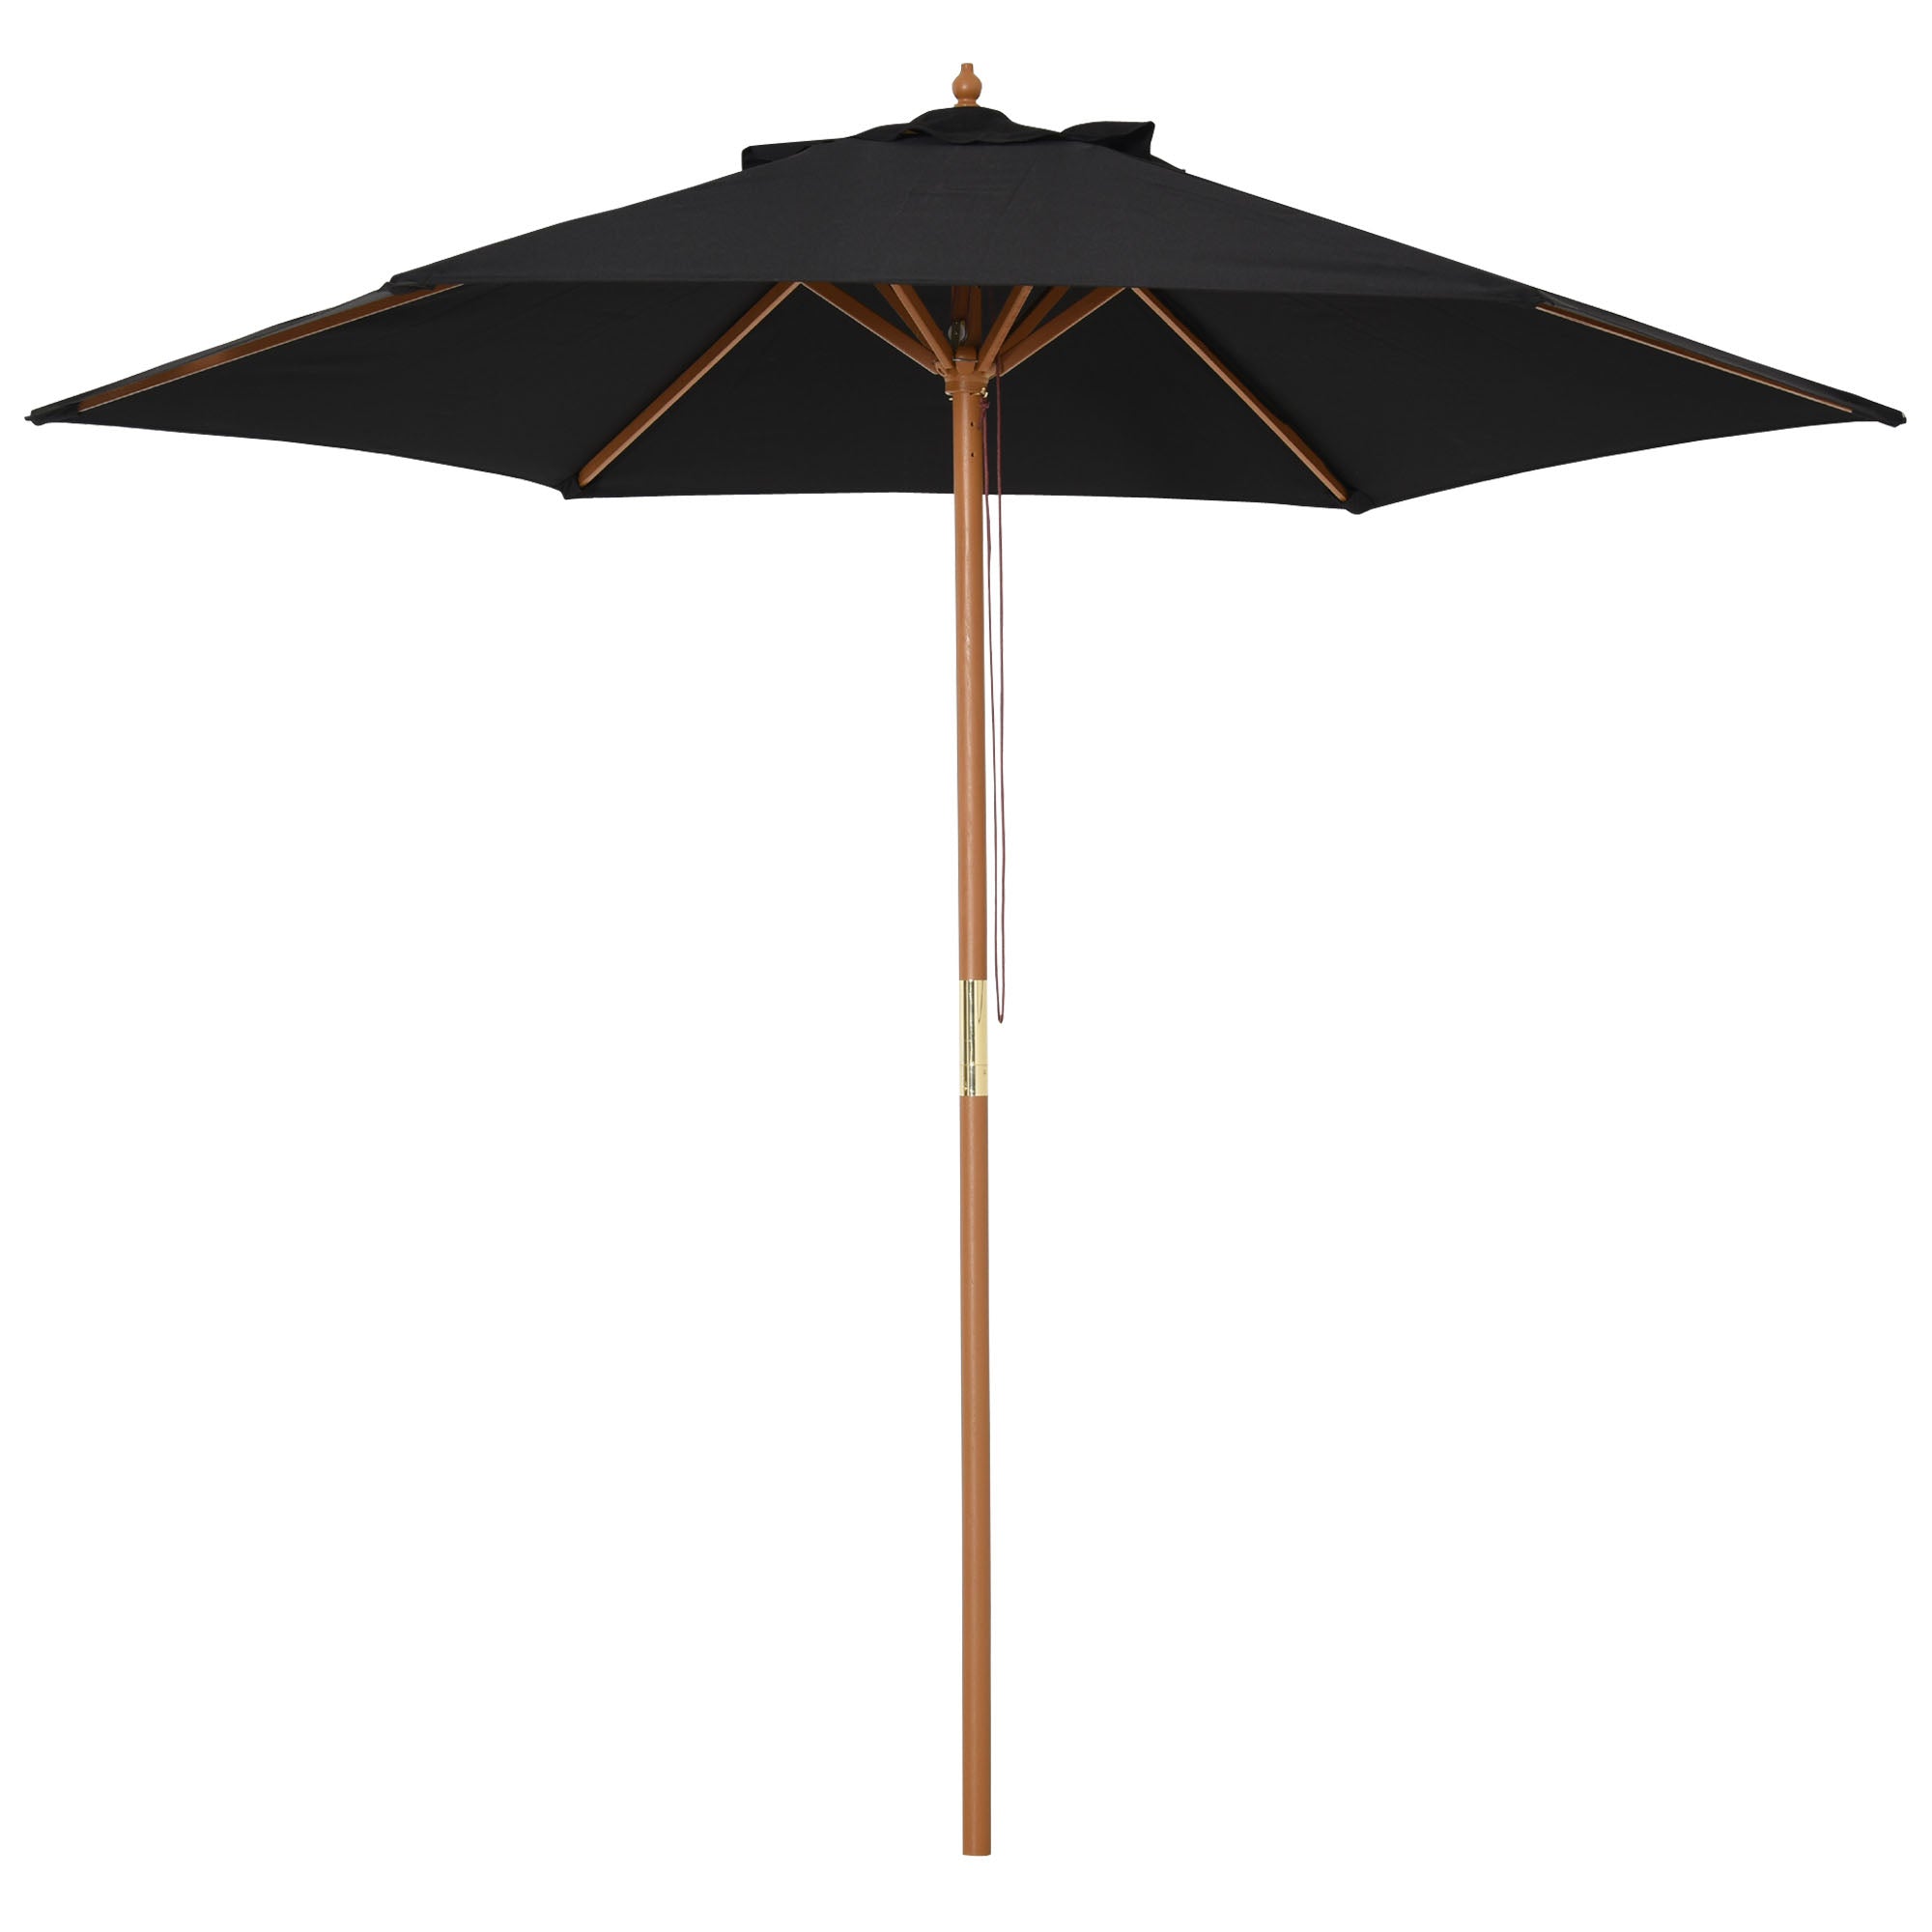 2.5m Wood Garden Parasol Sun Shade Patio Outdoor Wooden Umbrella Canopy Black-0